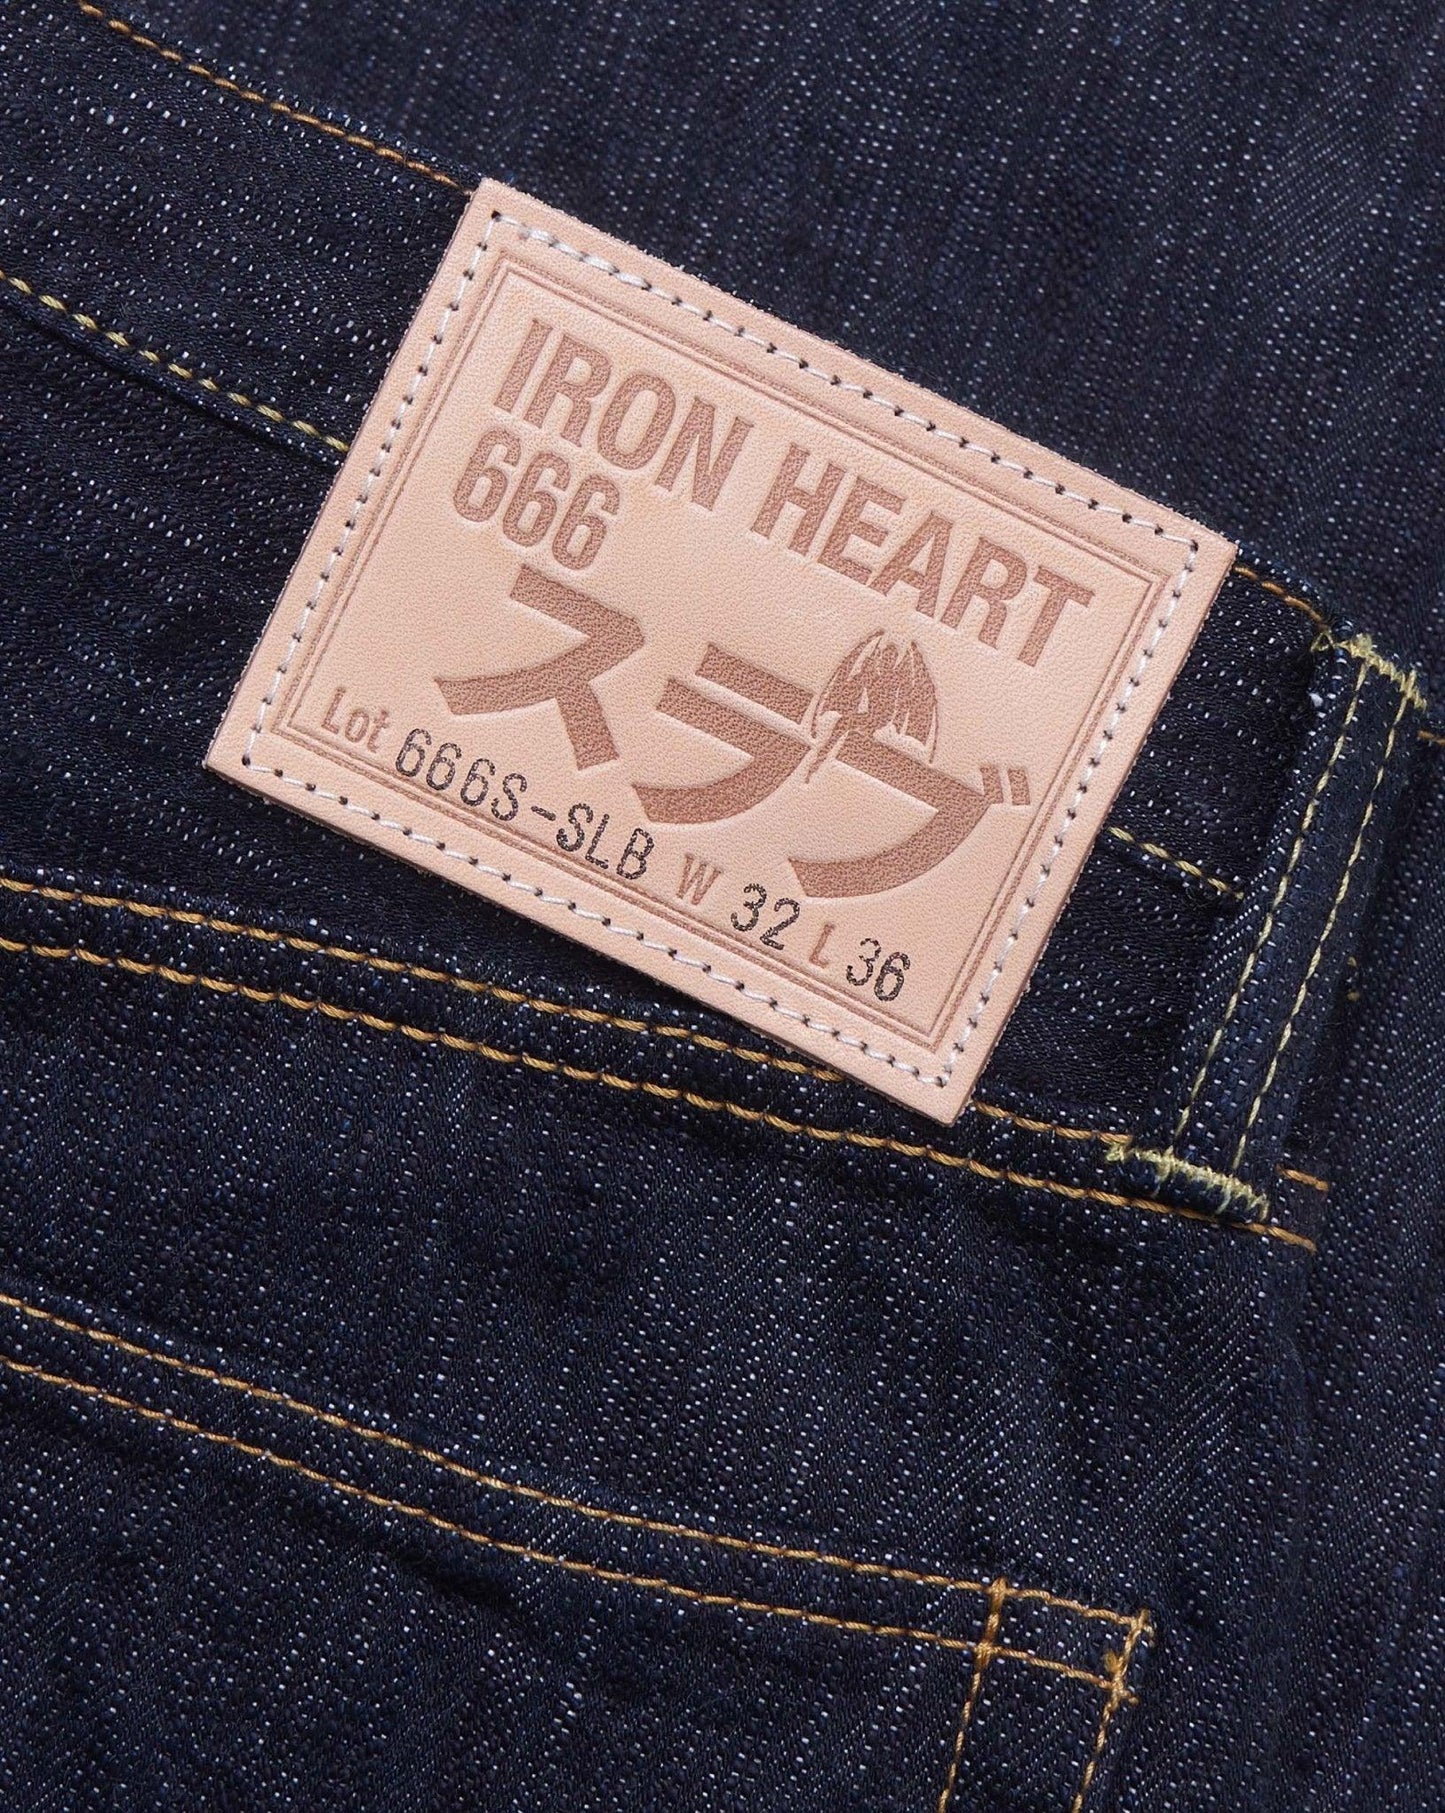 Iron Heart 16oz 666 Slubby Selvedge Denim Slim Straight Cut Jeans - Indigo -Iron Heart - URAHARA